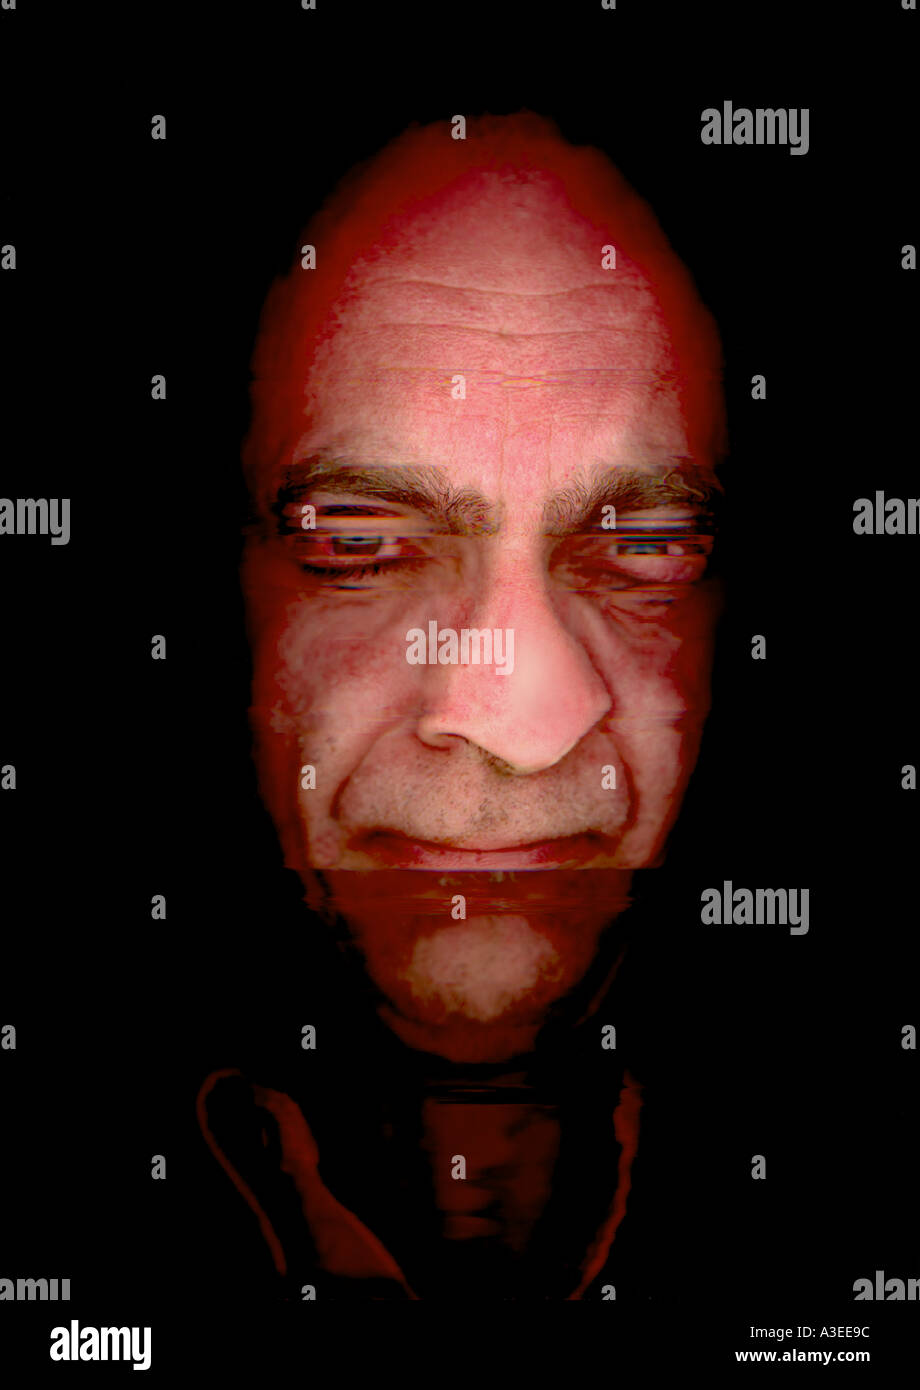 STRANGE DISTURBING MALE FACE RED BLACK Stock Photo - Alamy